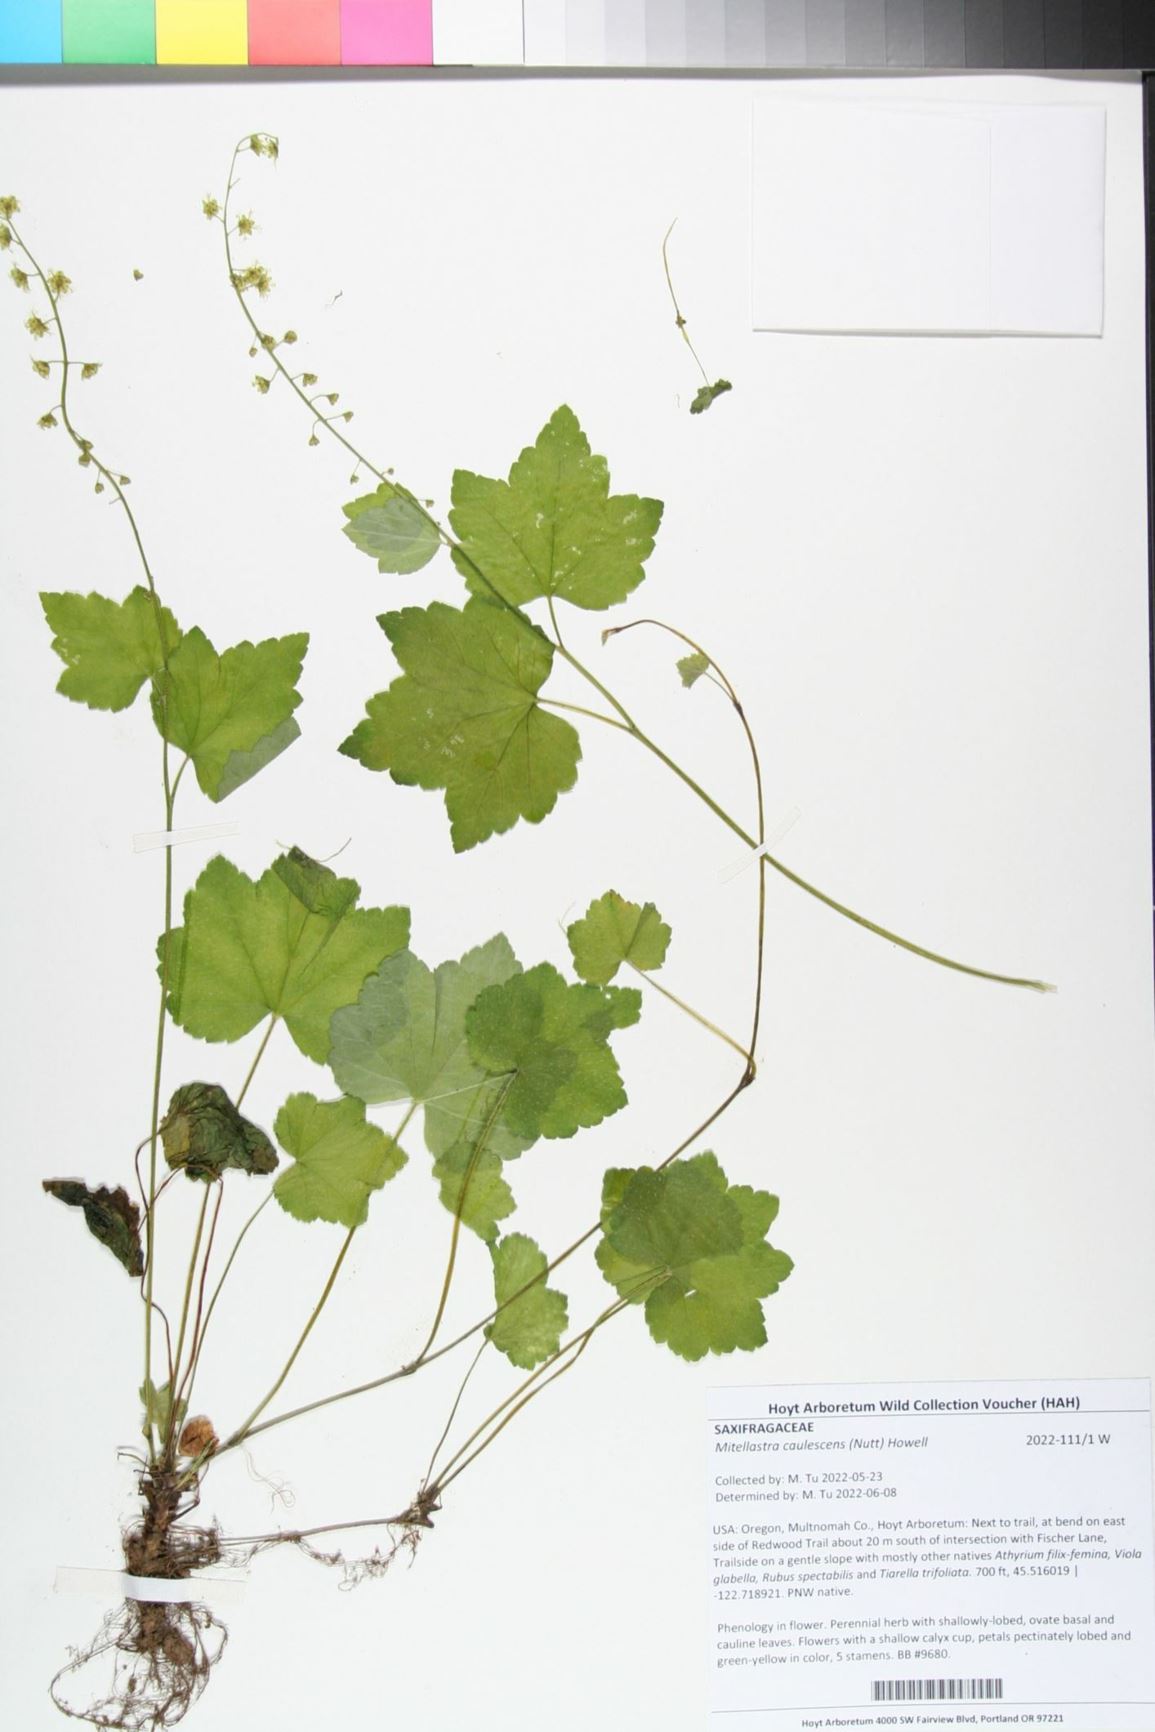 Mitellastra caulescens - leafy mitrewort